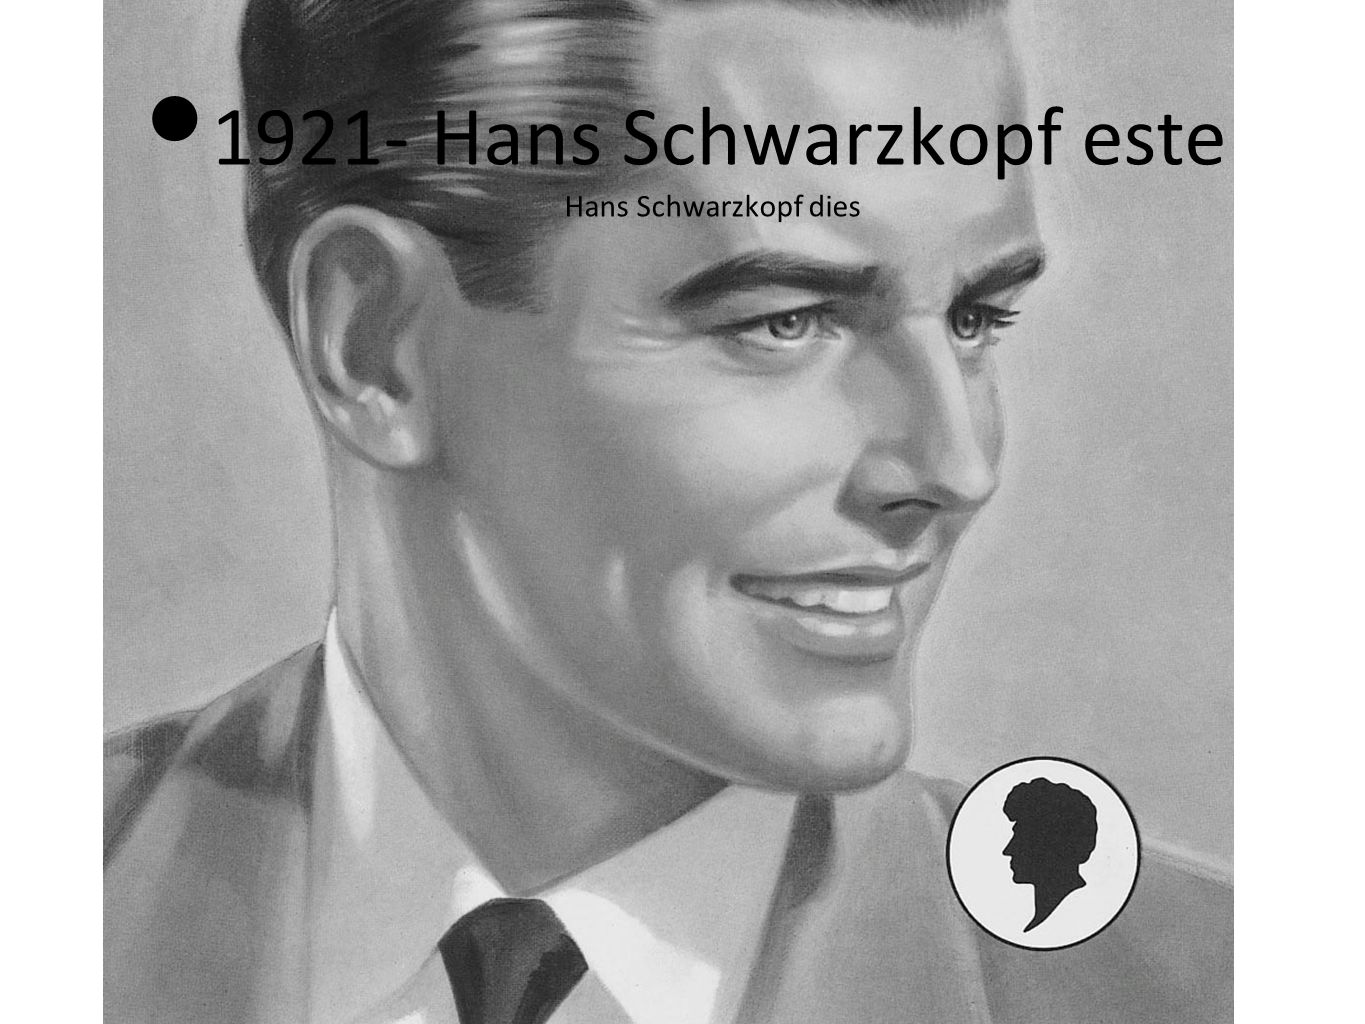 Hans Schwarzkopf) By Callie & Gen - ppt video online download